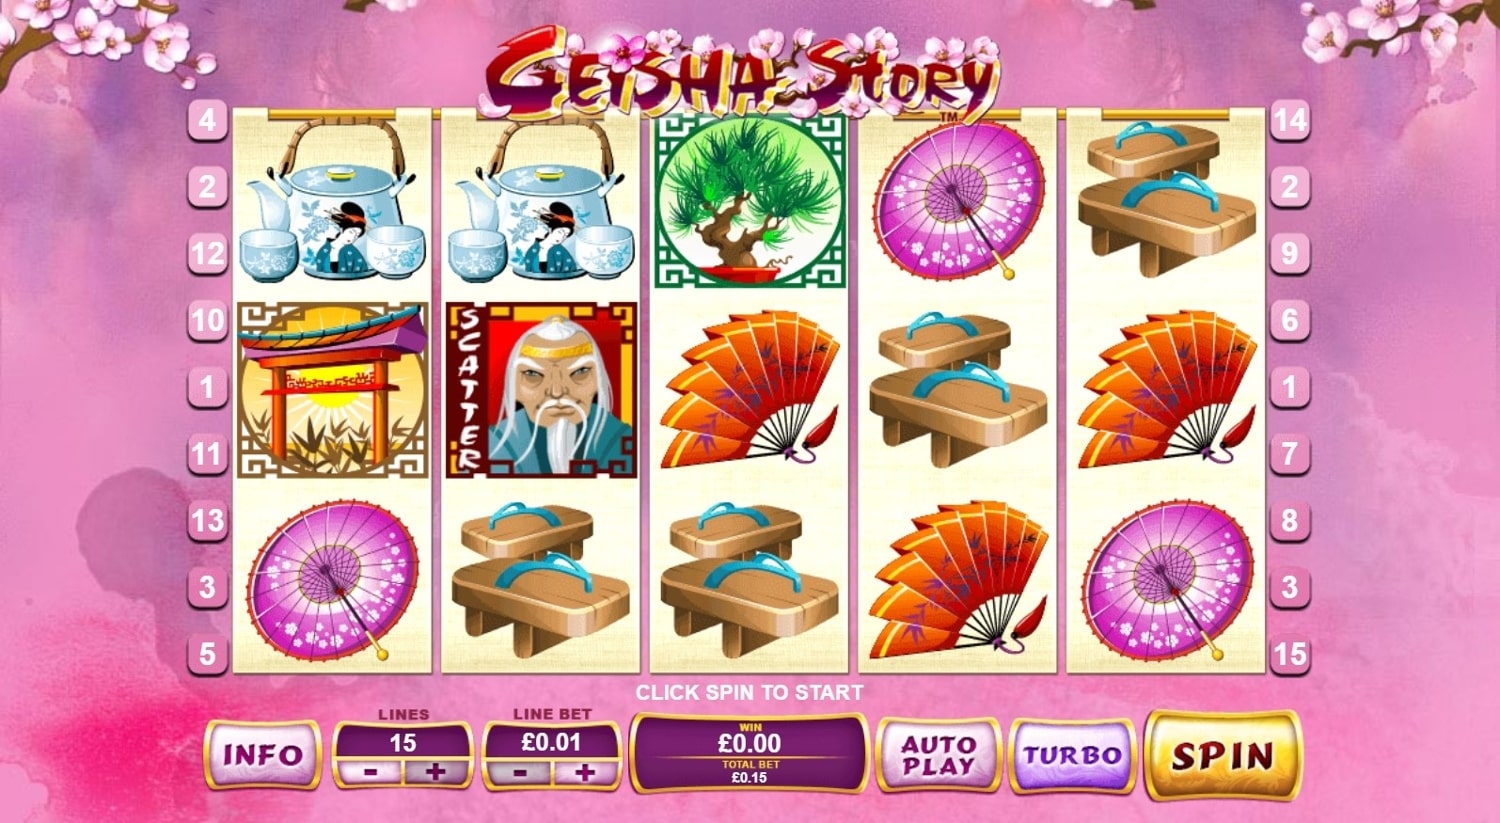 Geisha Story Free Spins